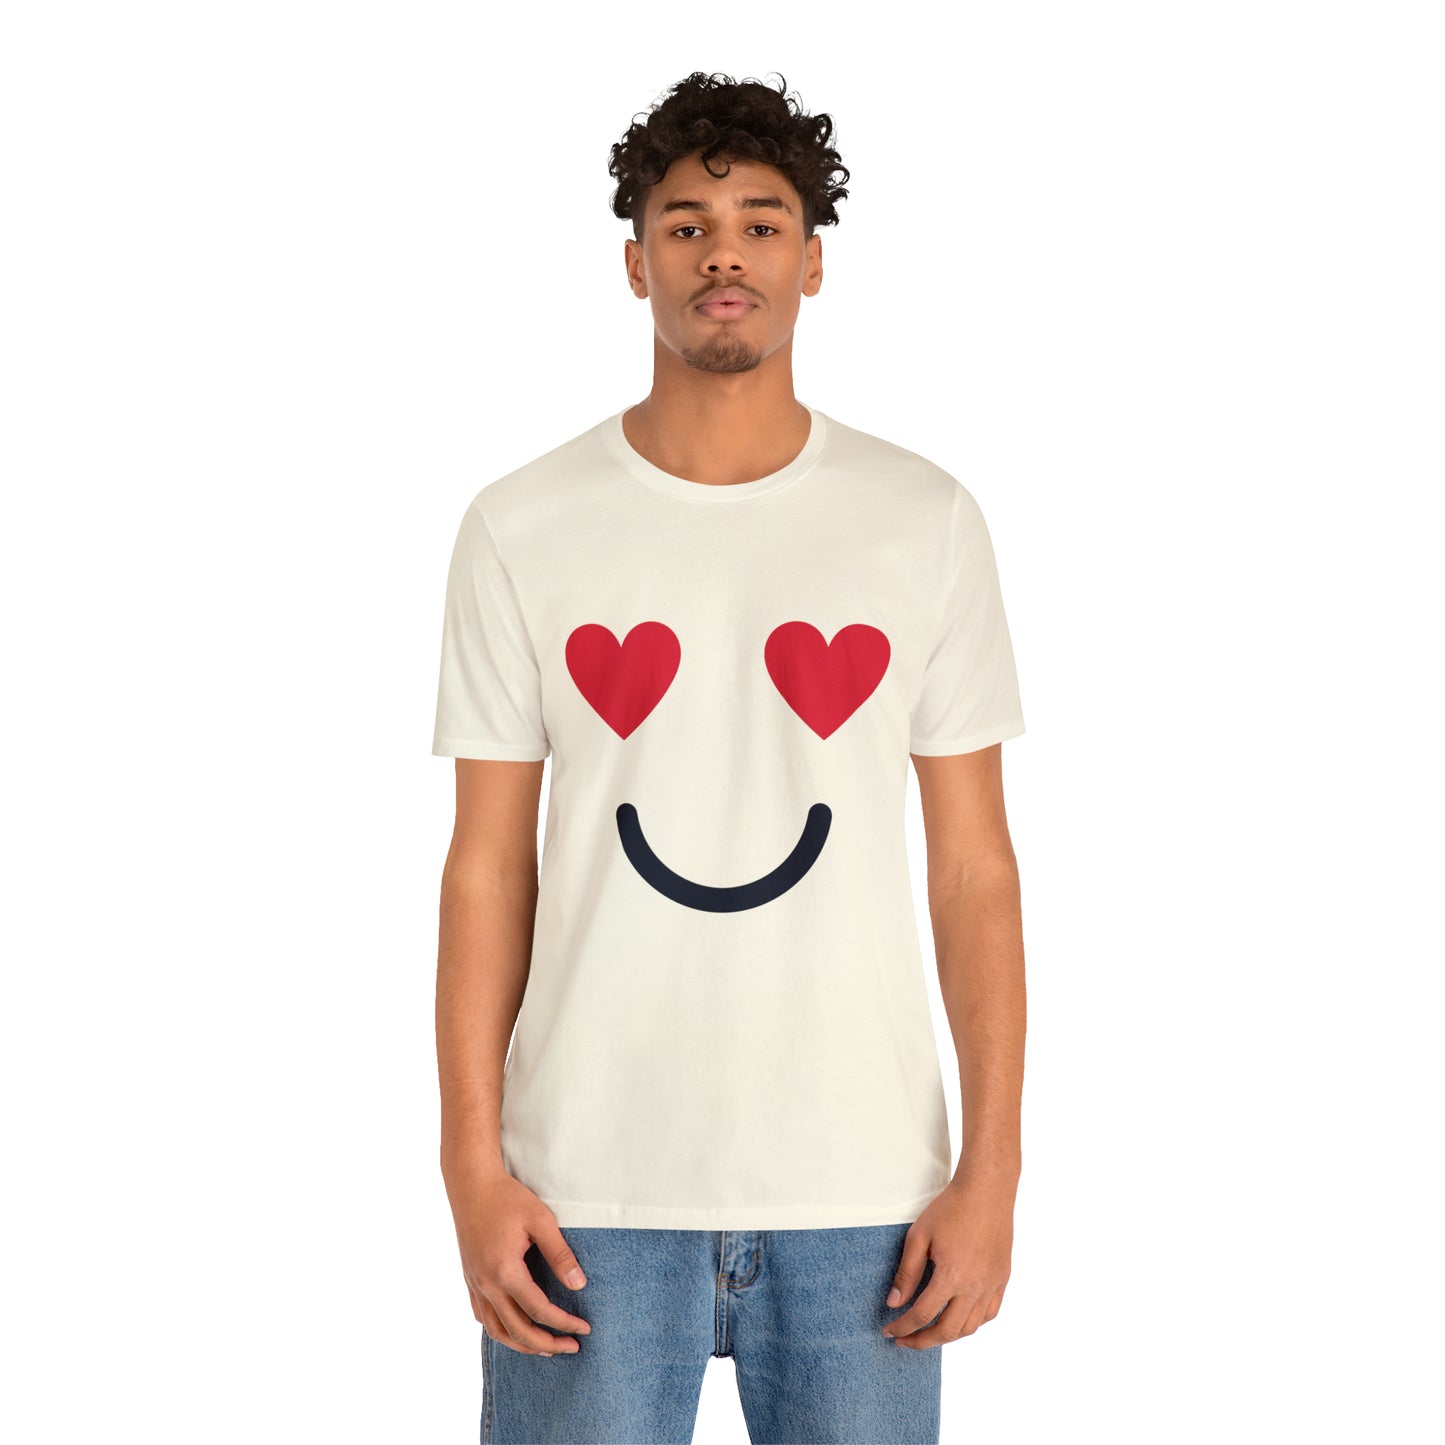 I am in Love Jersey Short Sleeve T-shirt